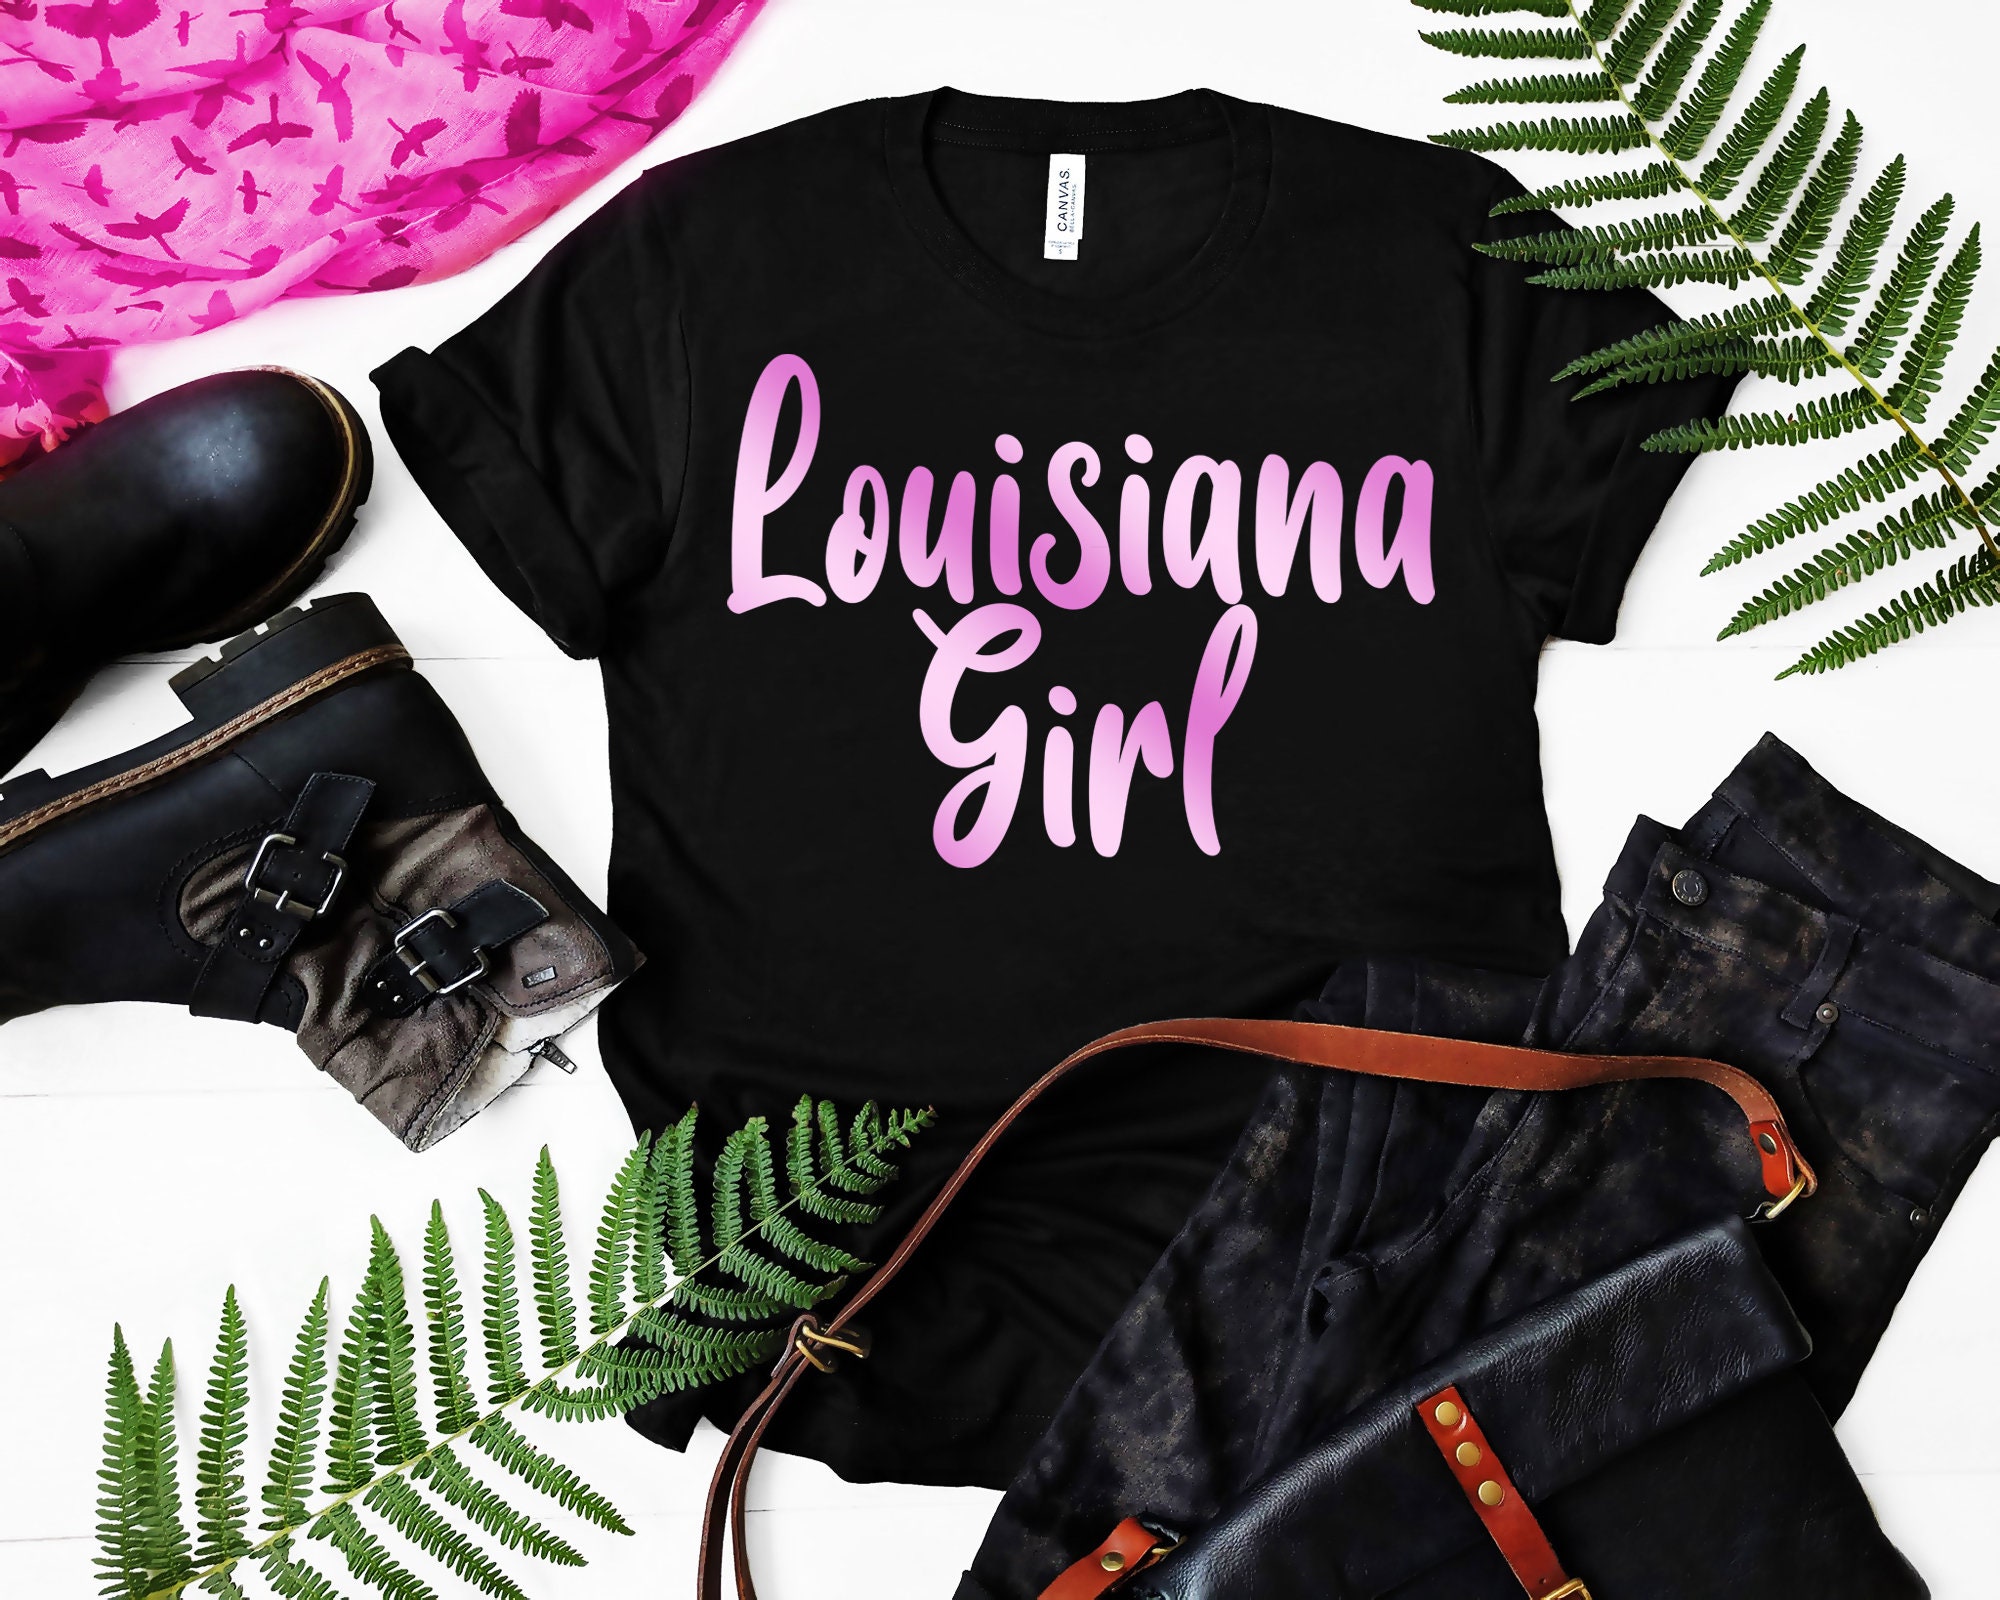  Louisiana Girl Tshirt I Love Louisiana State Home Tee